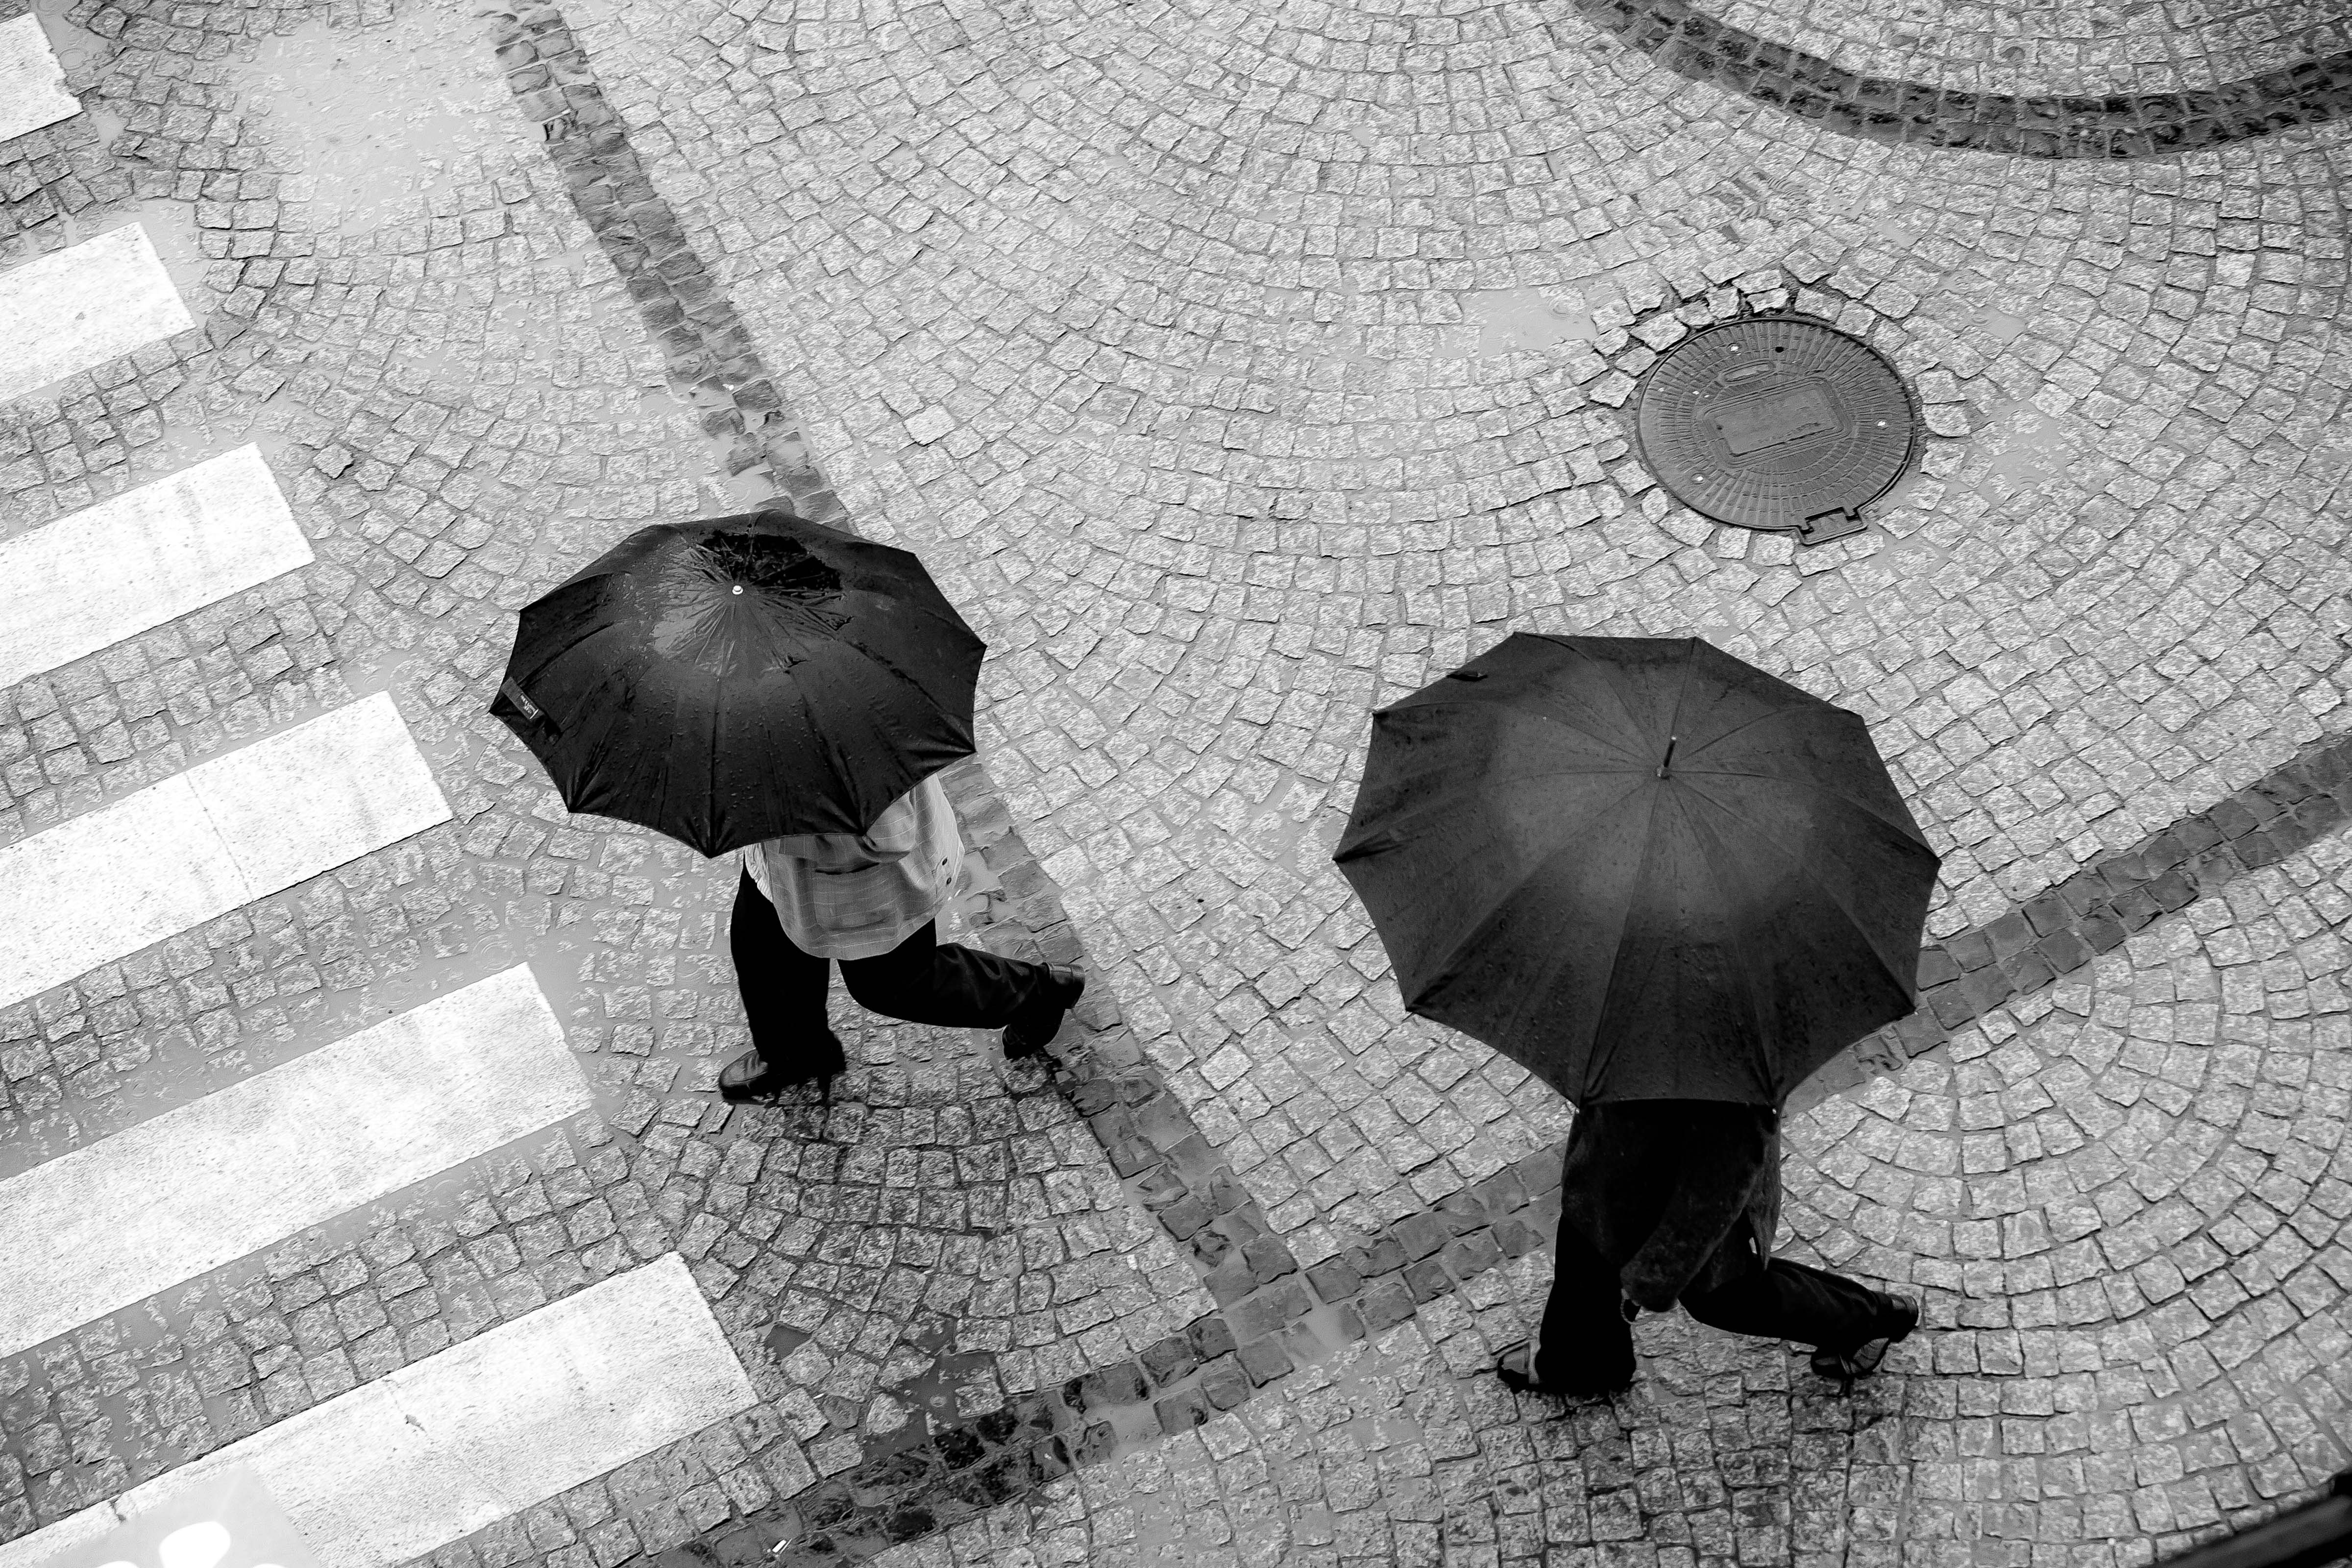 Turkey, Rize Prov, Umbrellas, 2010, IMG 7542 BW